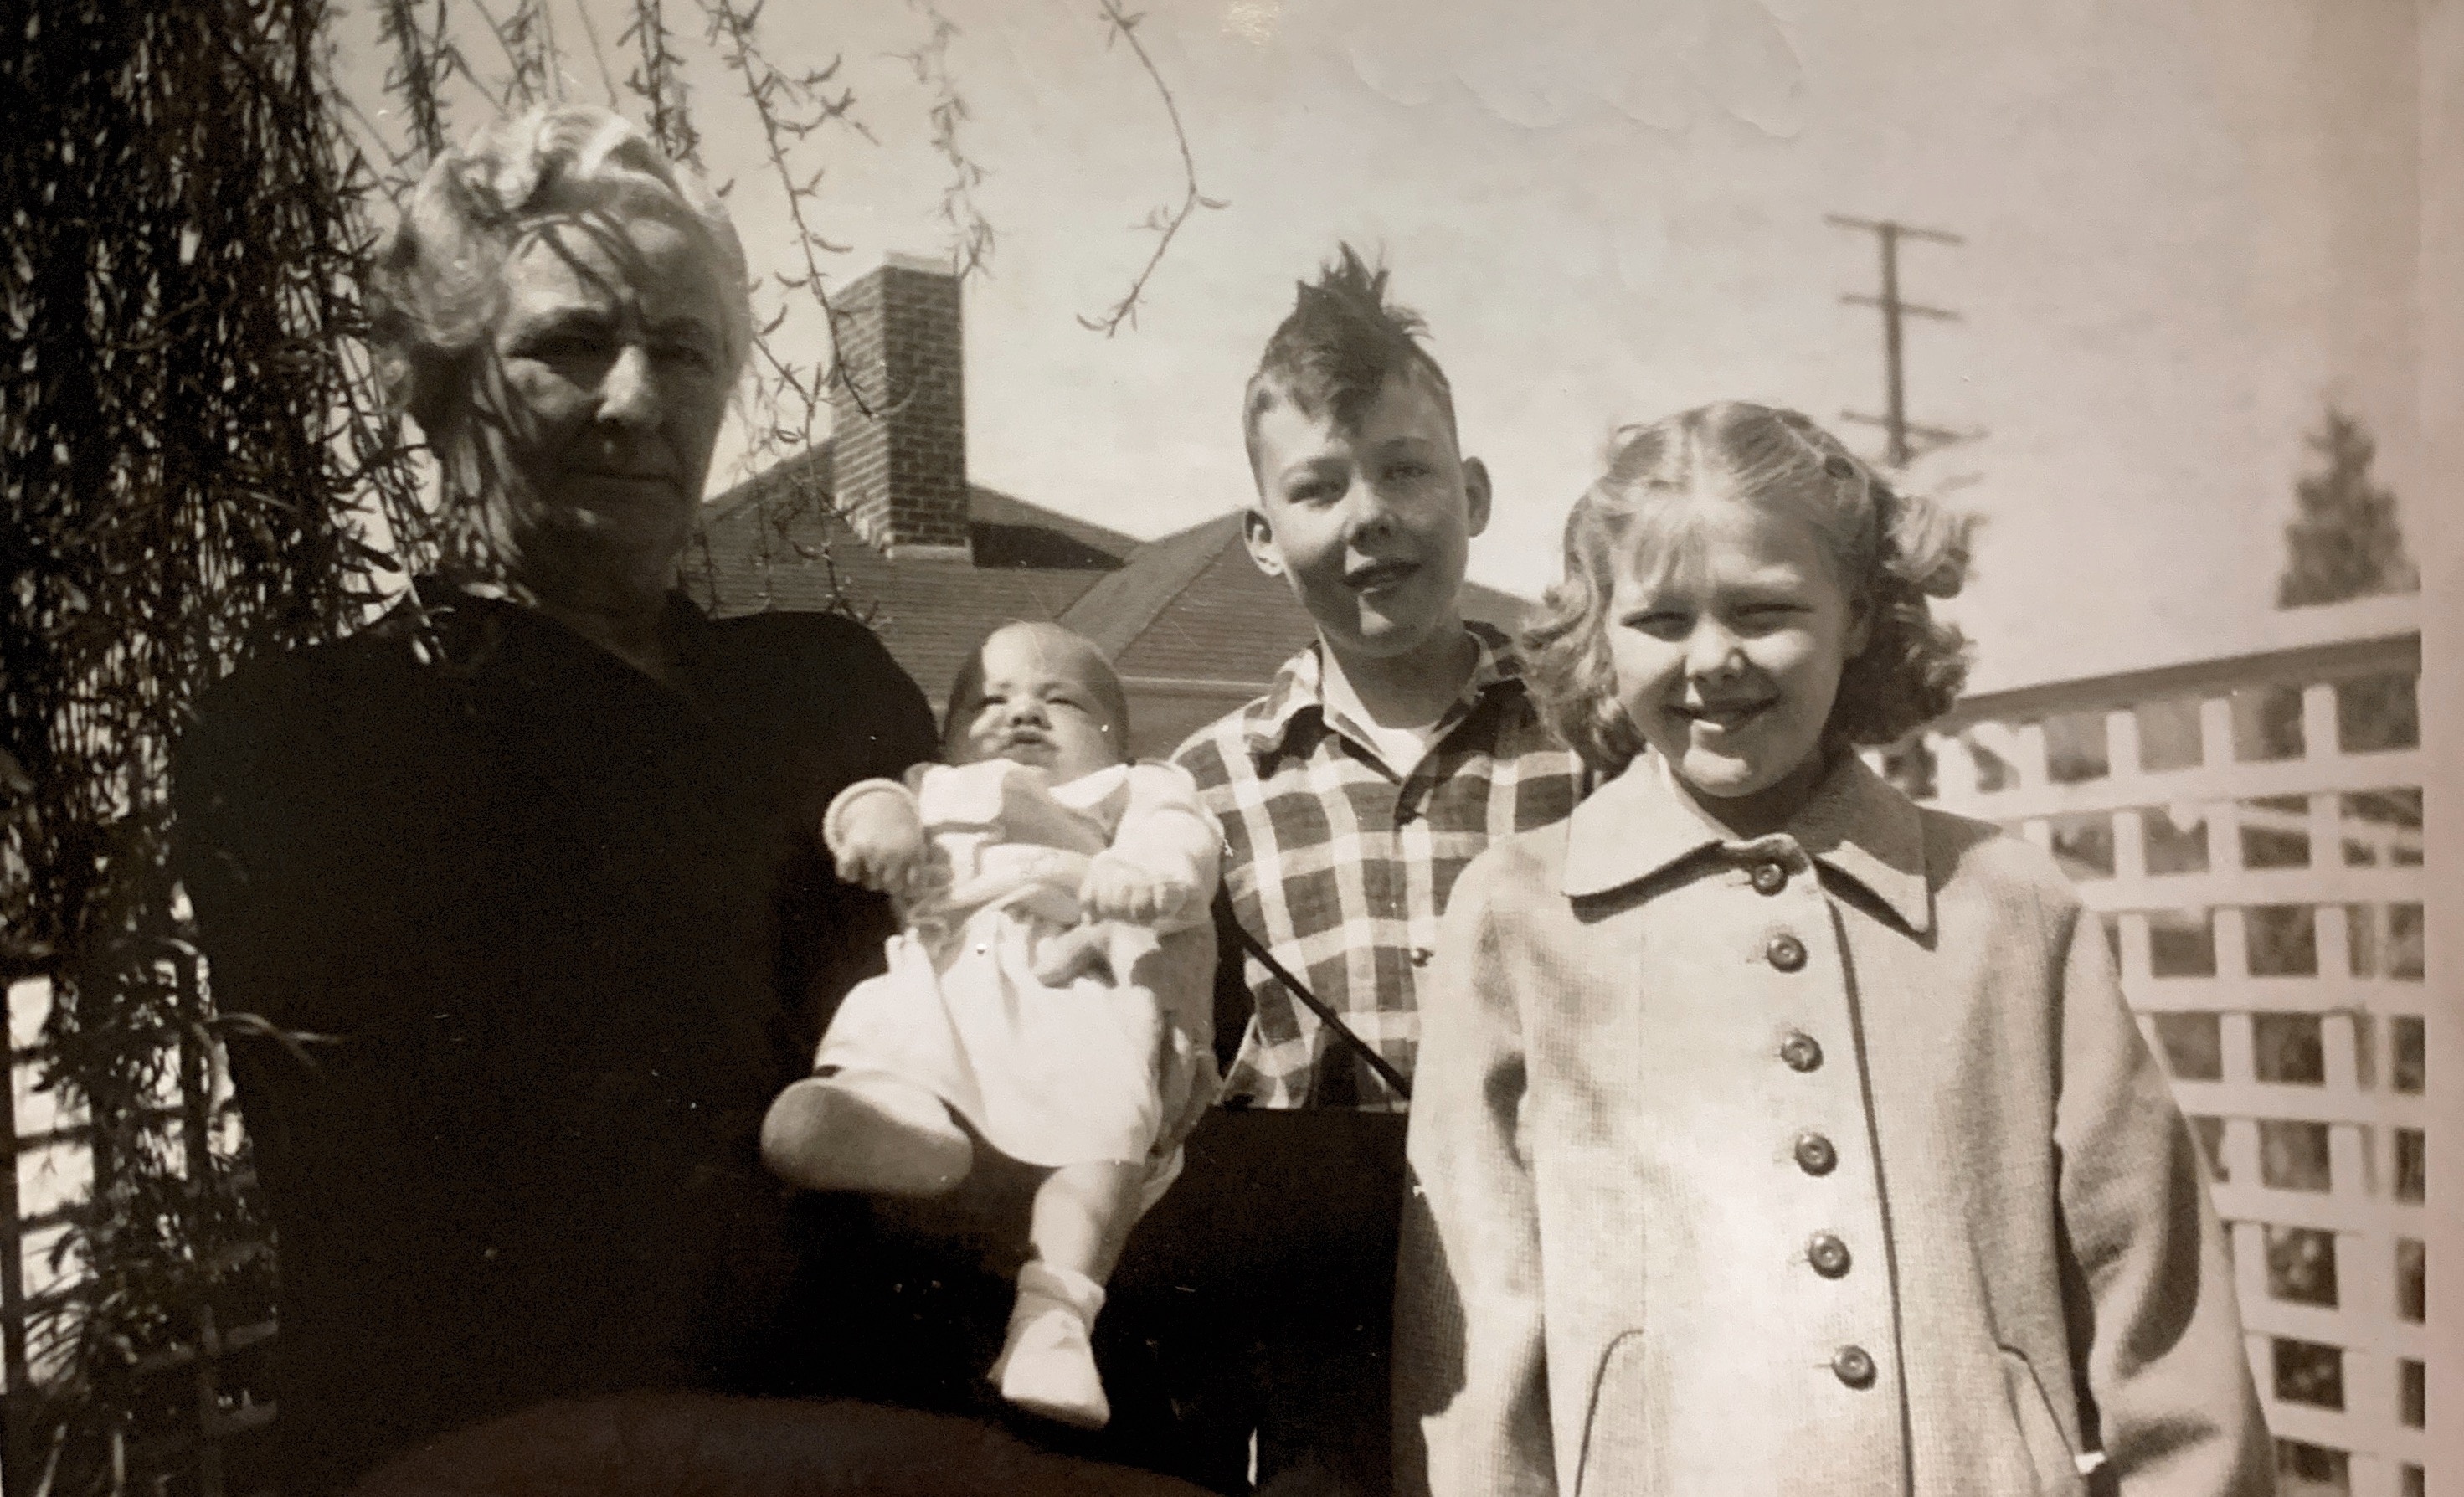 Lillian Boyd “Aunt Lil”, Susan Keller, Dale & Karen Madden. April 1952. Loving the Mohawk hair Dale.